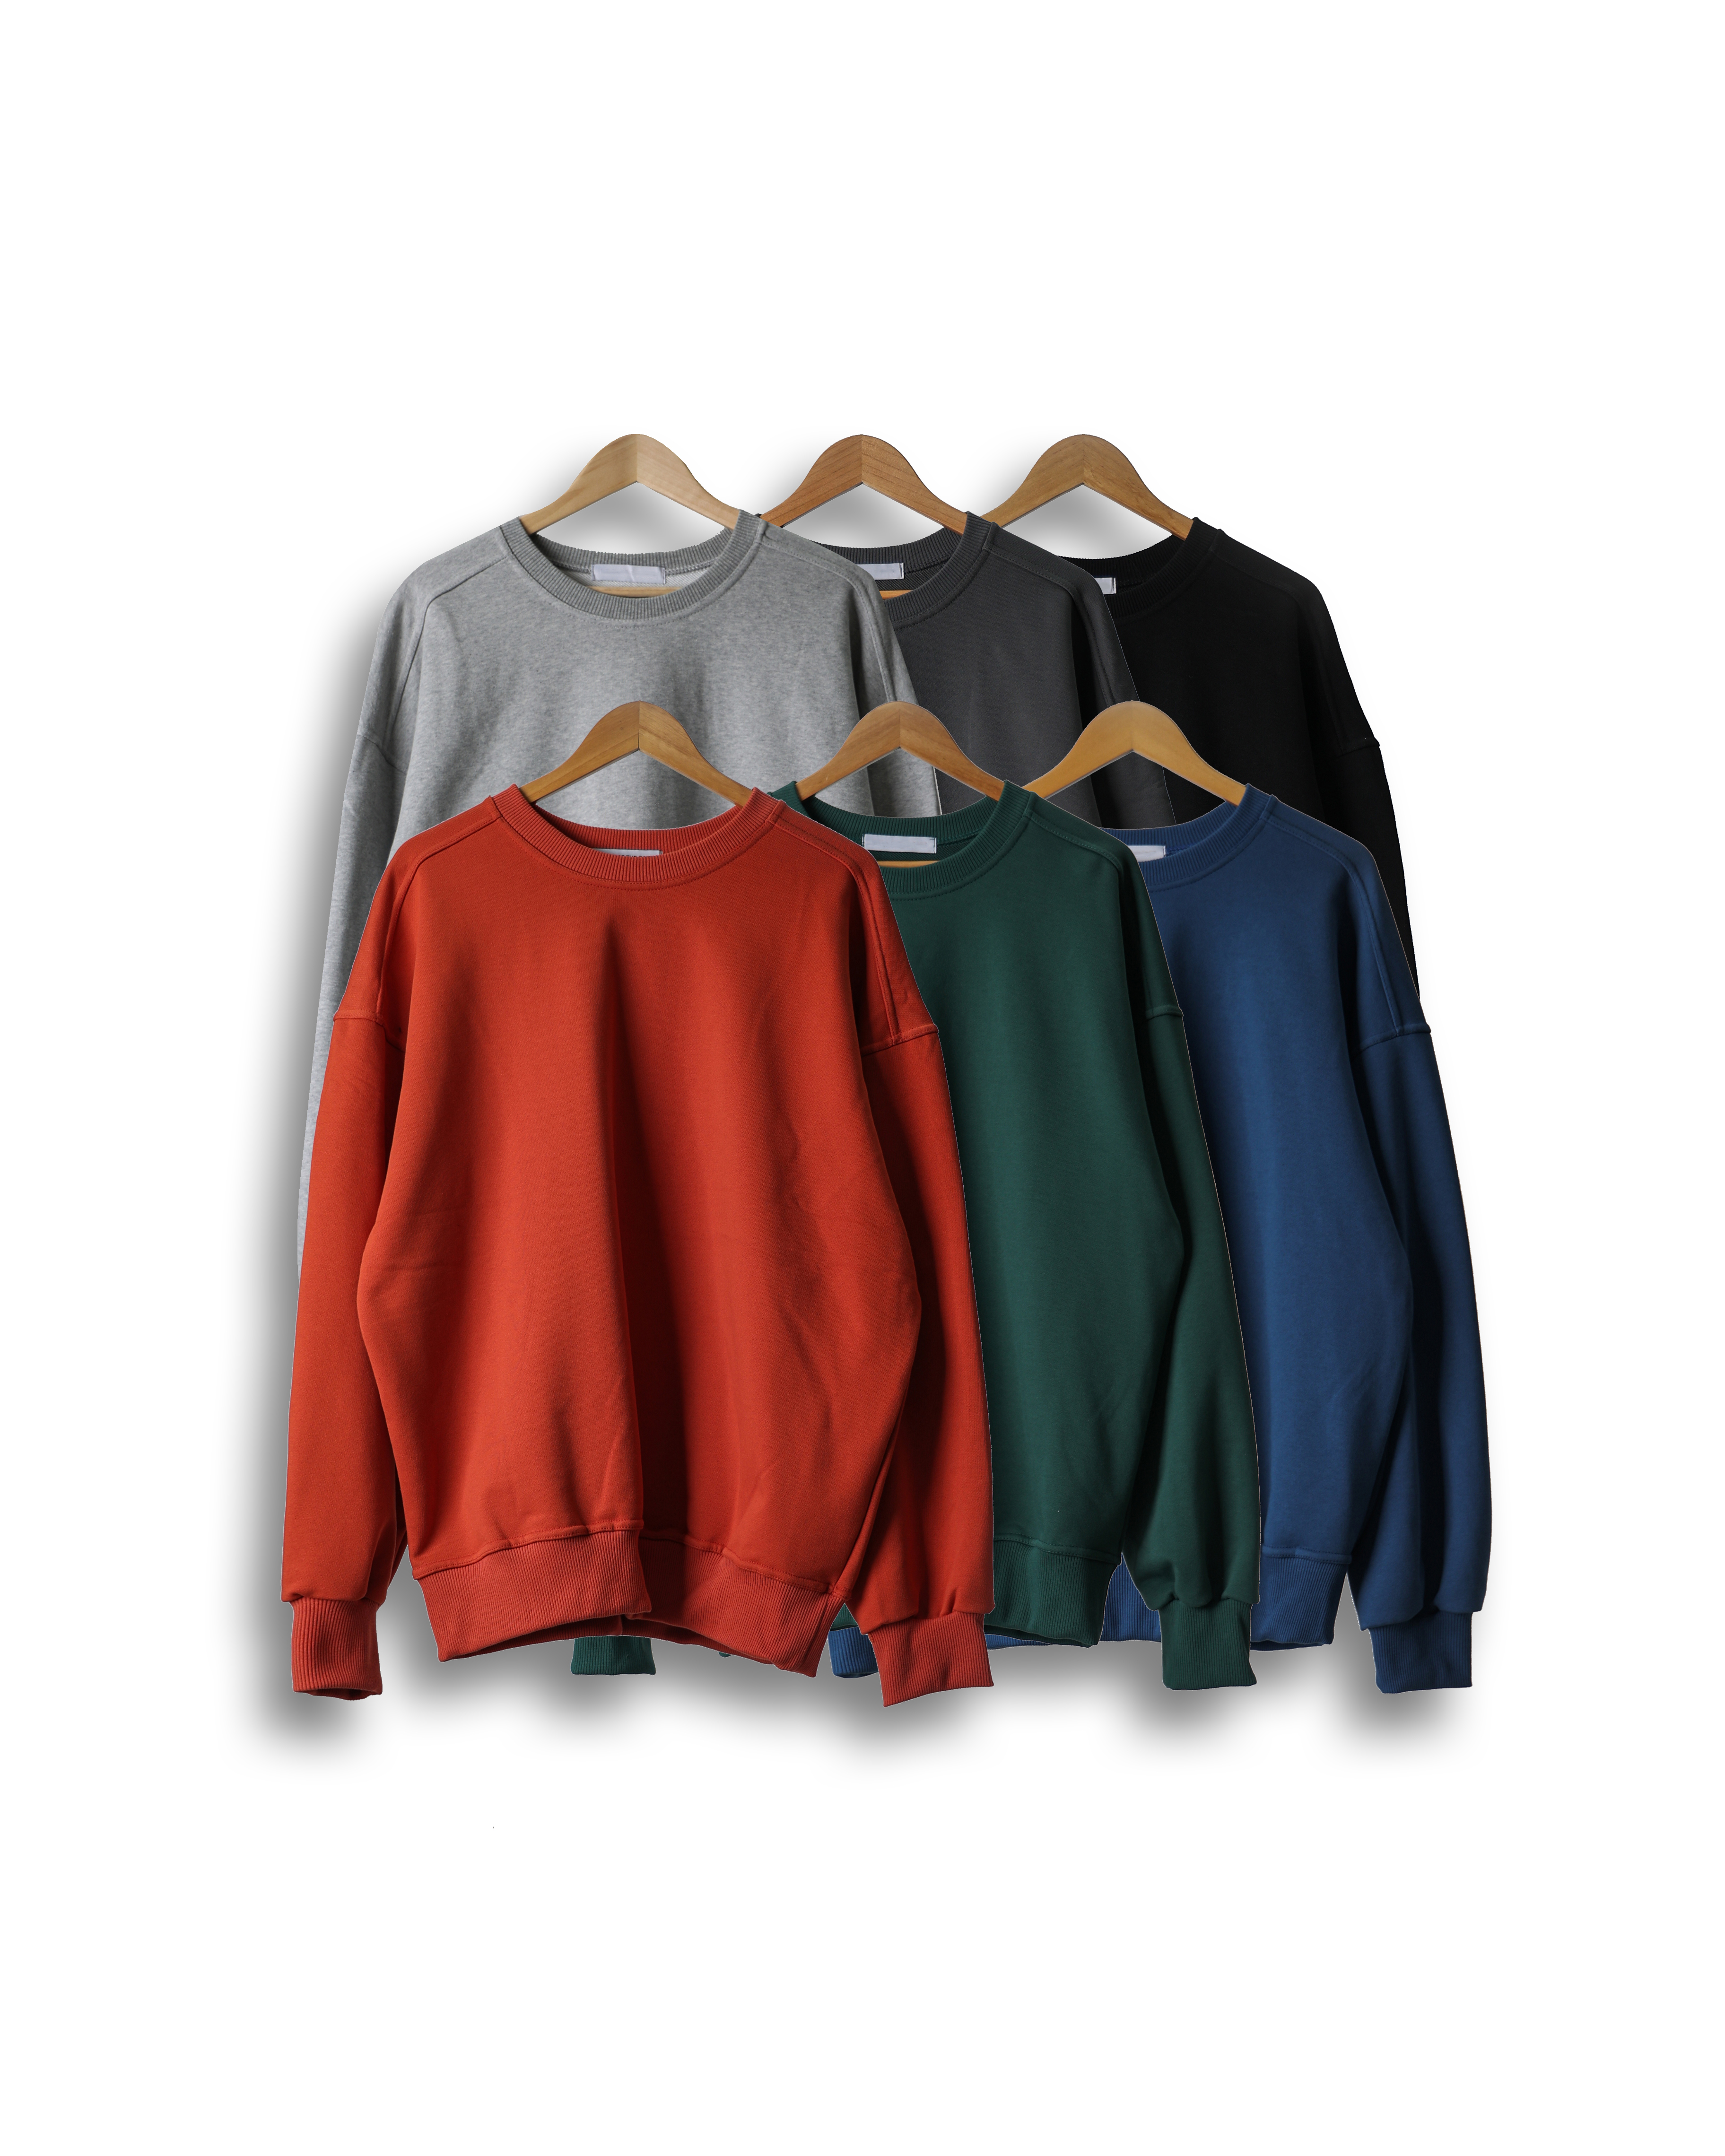 NEVER Detailing Ovesized Basic Sweat Shirts (Black/Charcoal/Gray/Blue/Green/Carrot)